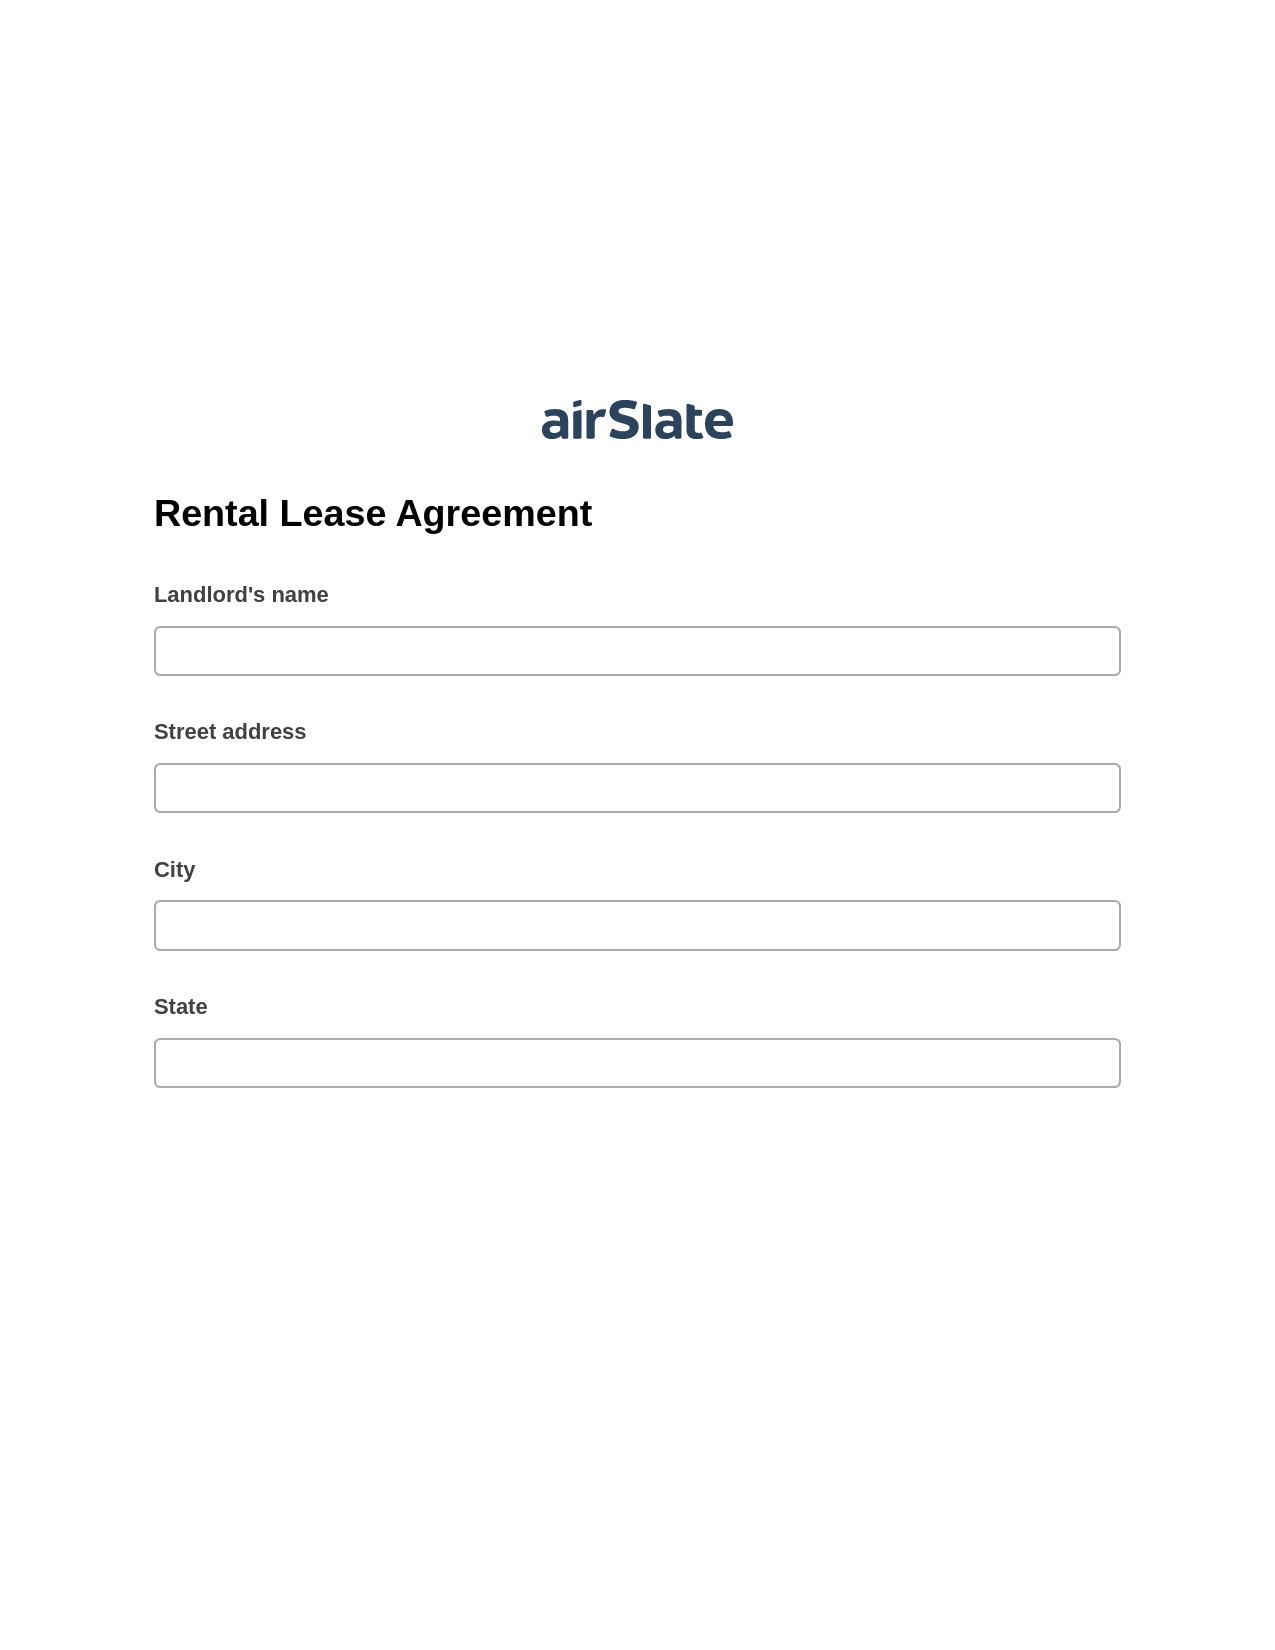 Rental Lease Agreement Pre-fill Slate from MS Dynamics 365 Records Bot, Google Cloud Print Bot, Slack Notification Postfinish Bot